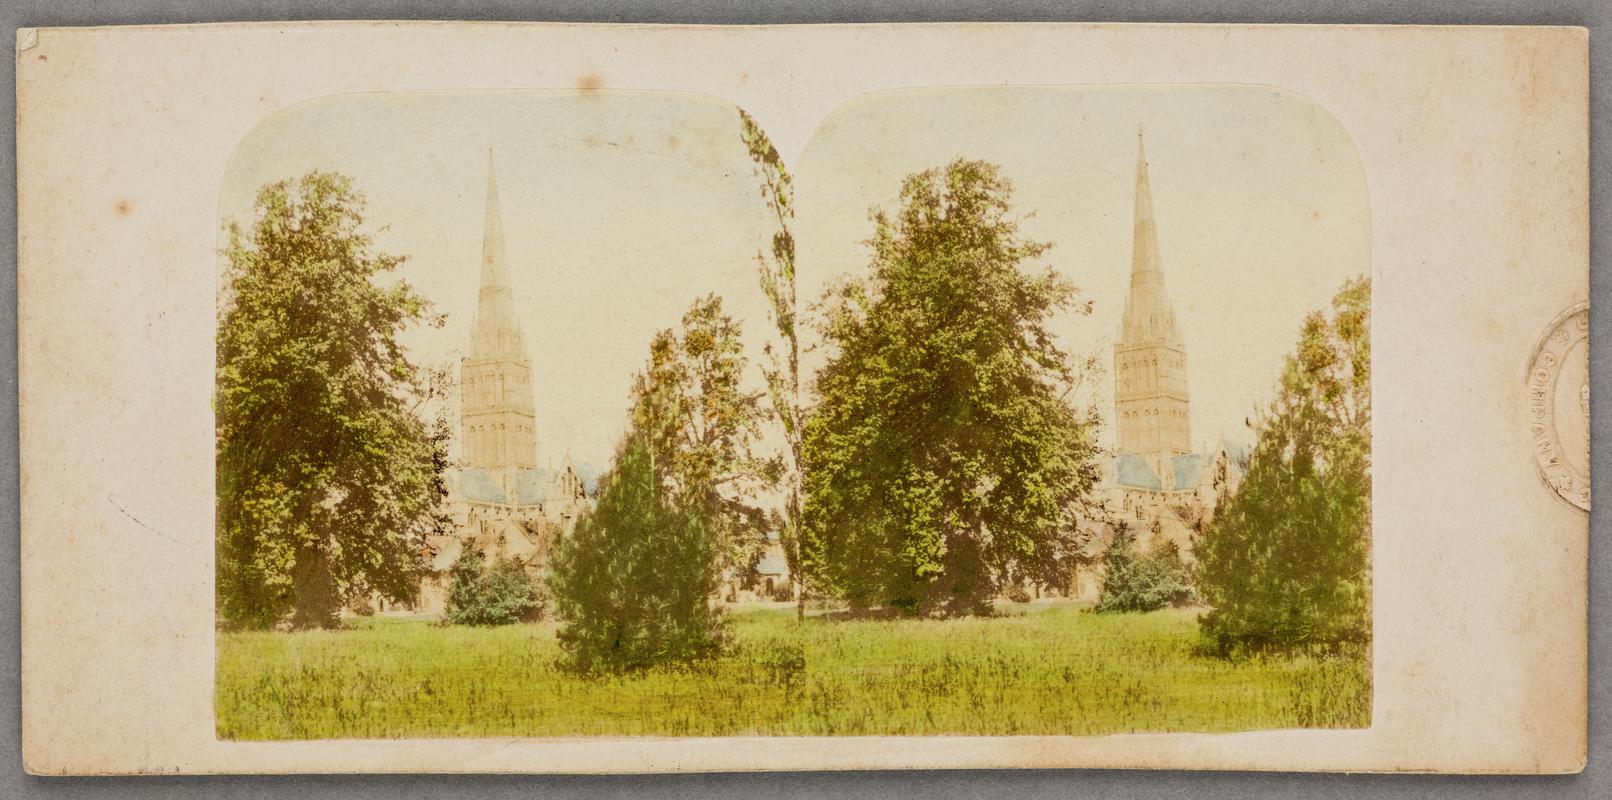 Salisbury Cathedral, photograph